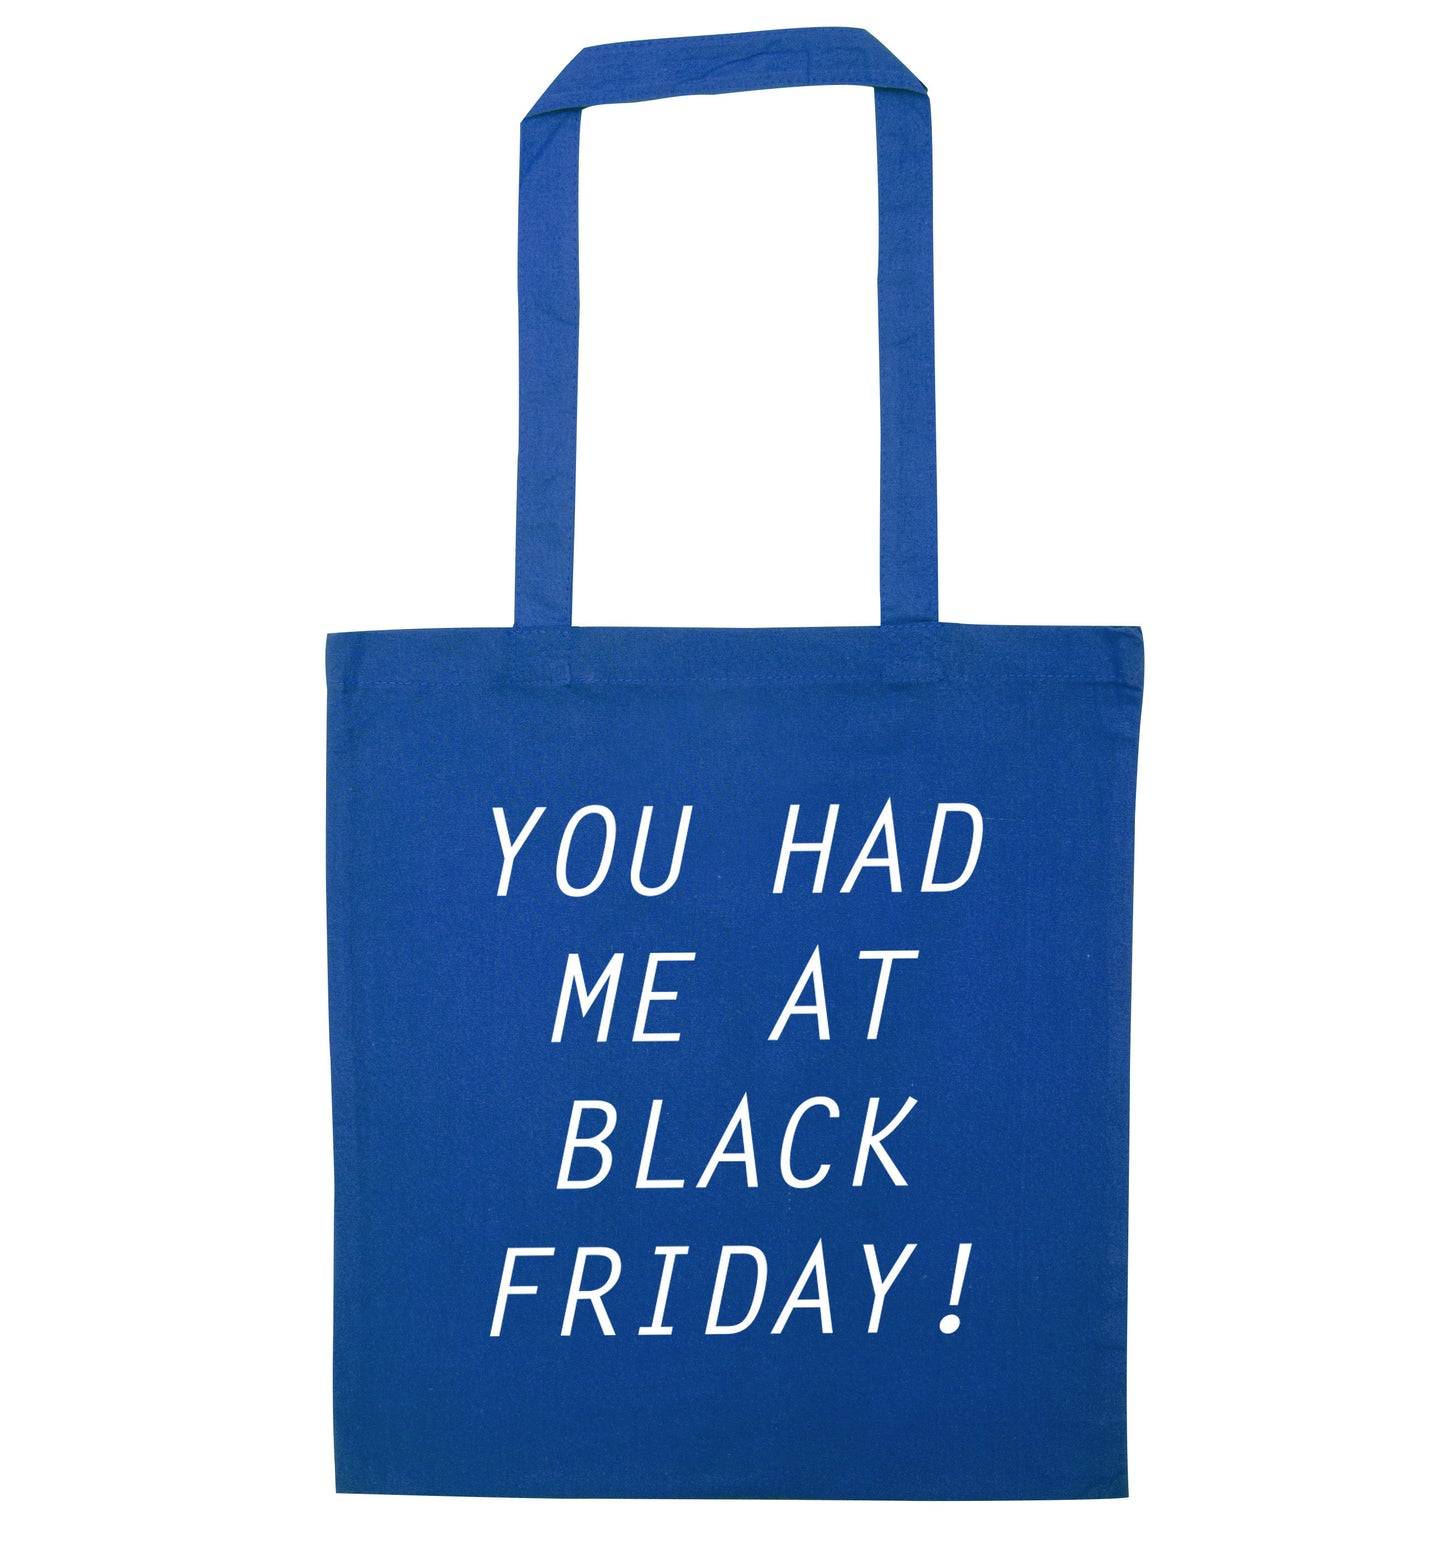 You had me at black friday blue tote bag